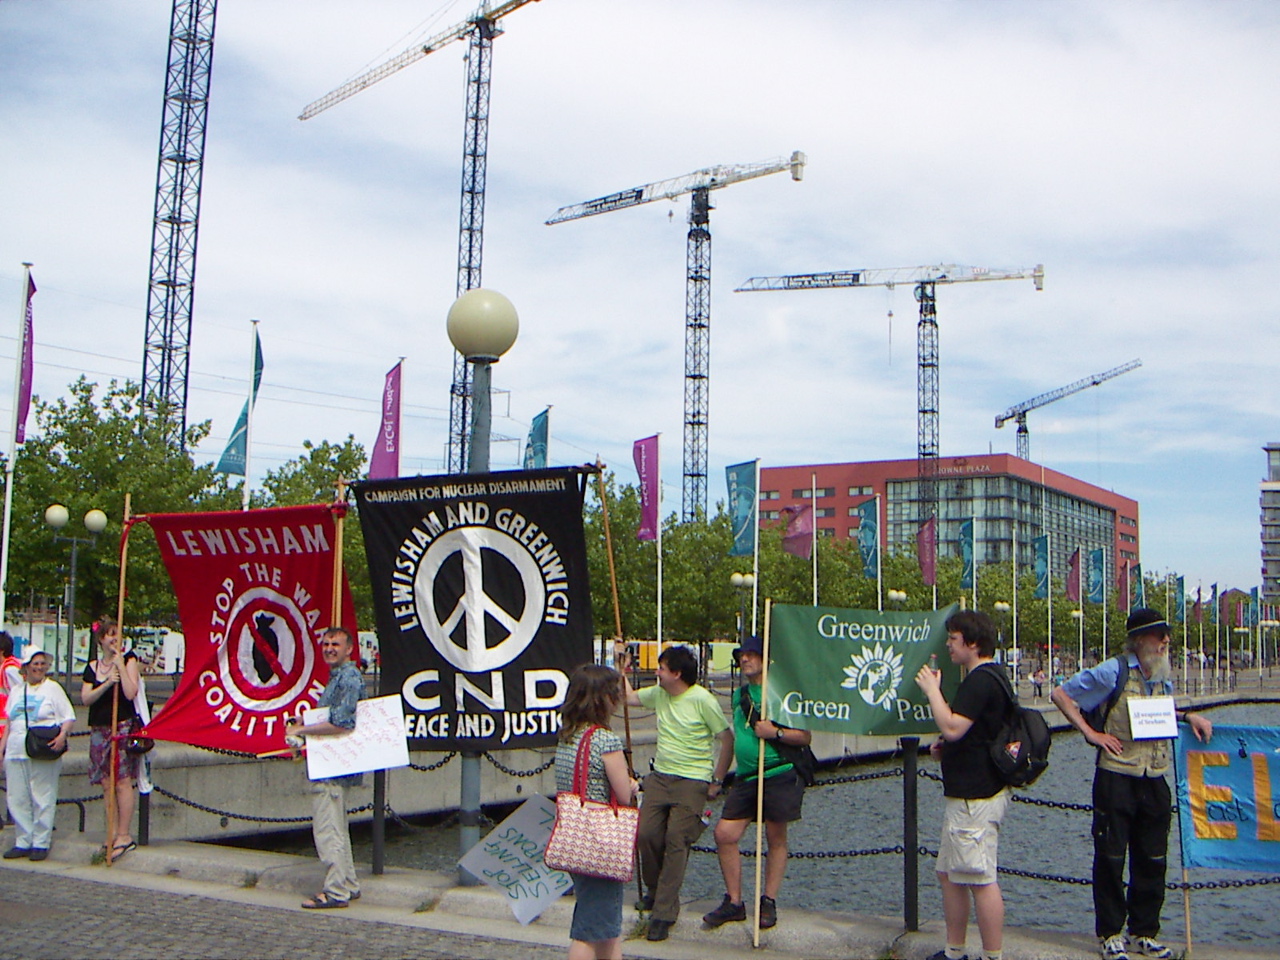 Cranes on ExCeL land with protestors